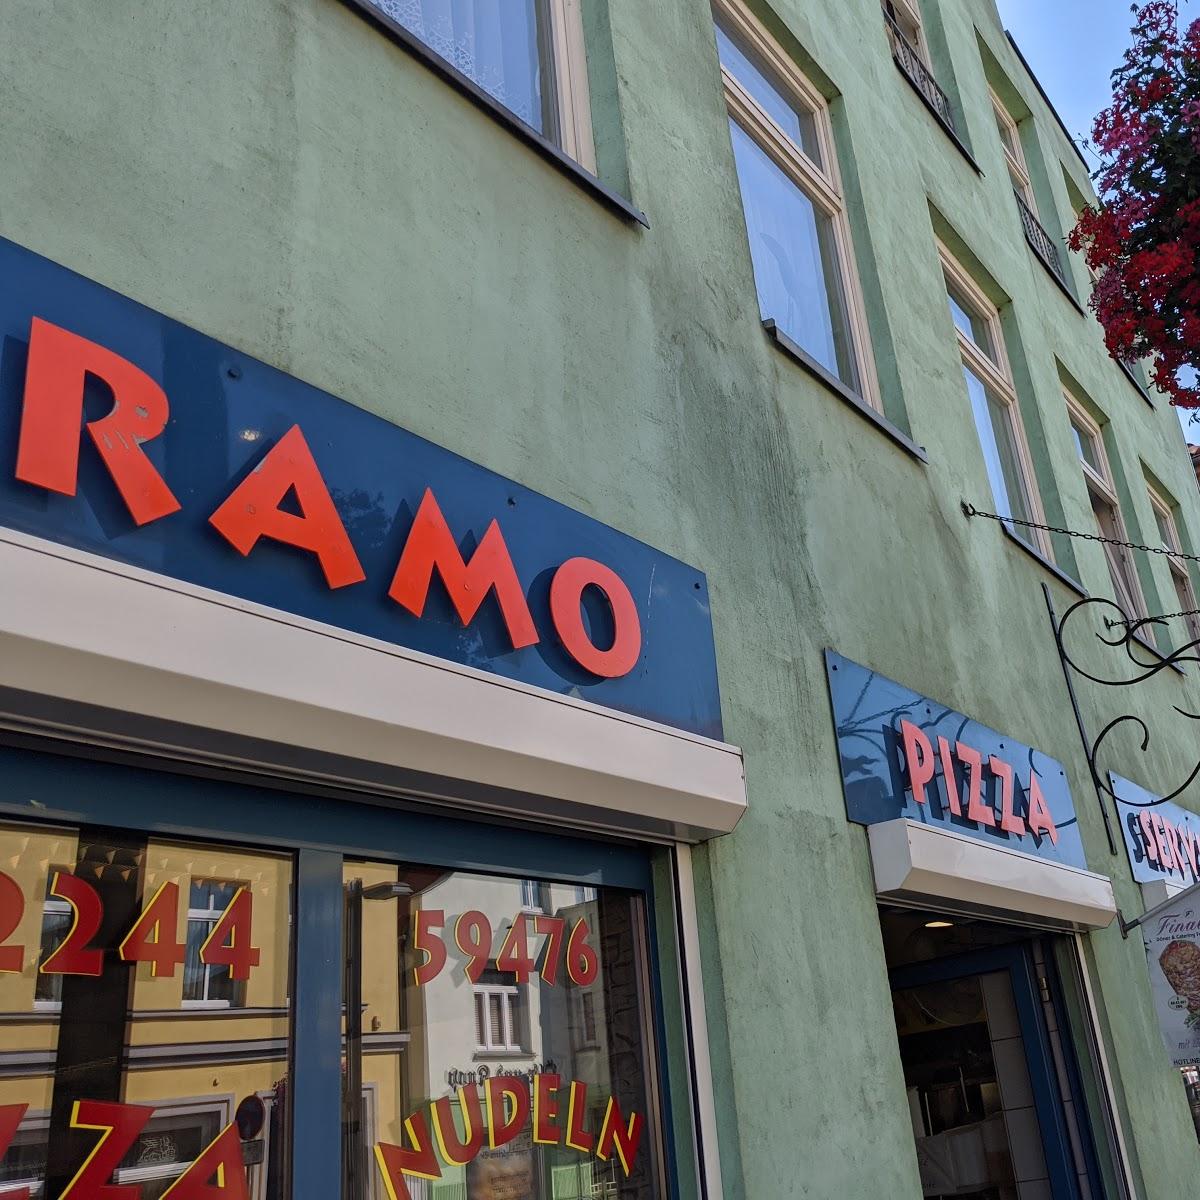 Restaurant "Ramo-Pizza-Service Inh. Mahmood Saqib" in Bützow